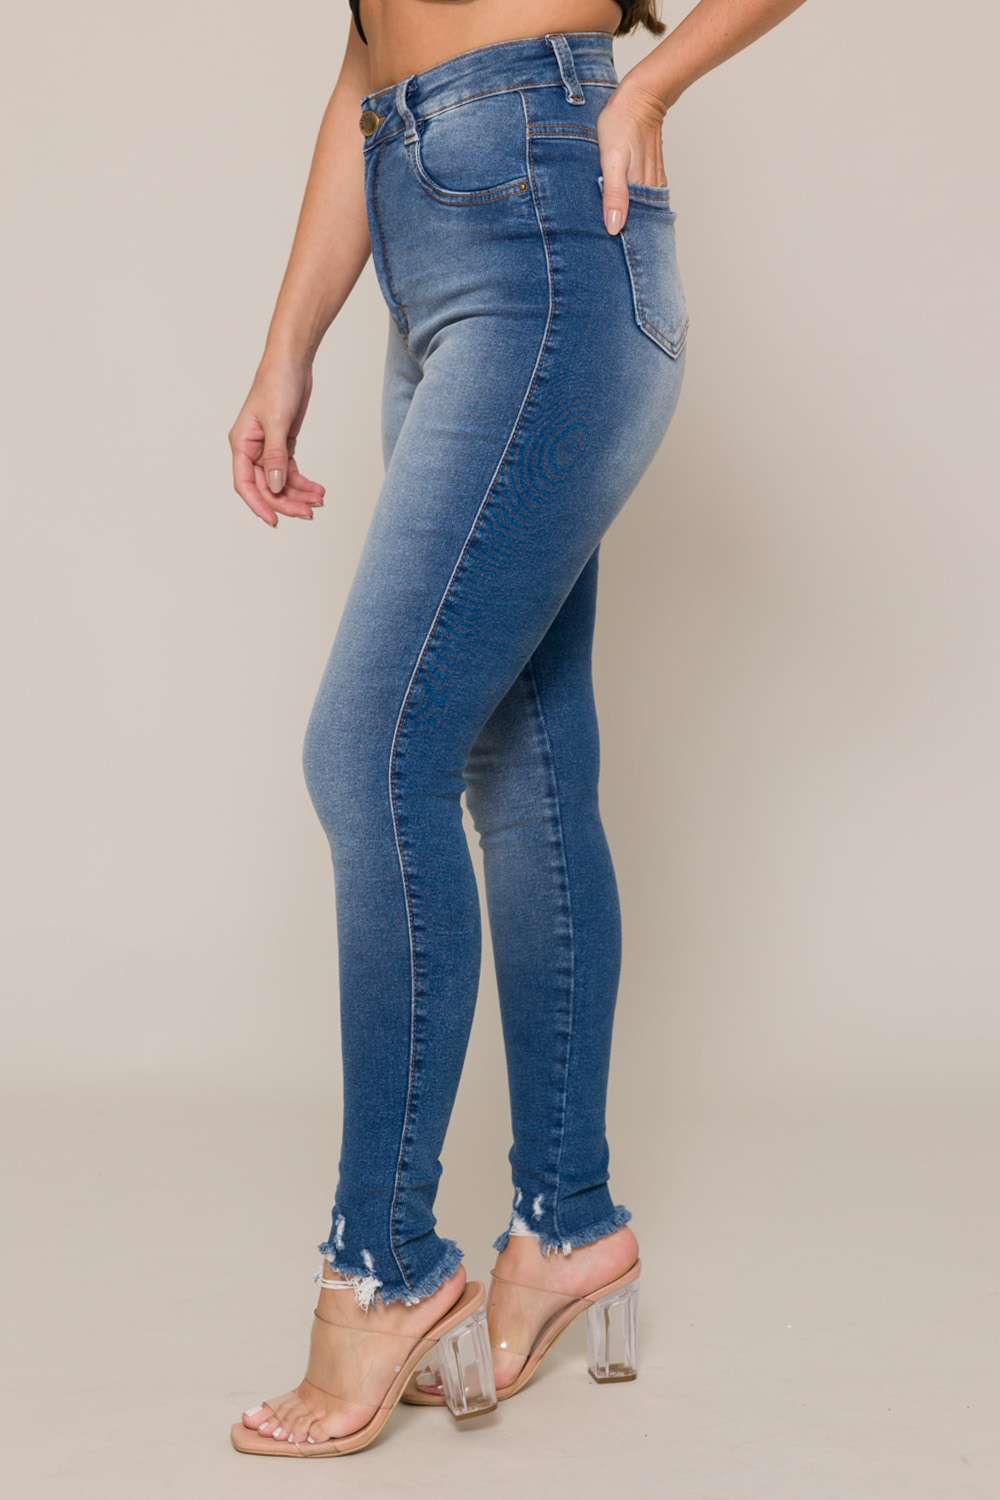 Calça Jeans Skinny Hot Pant Basic 11649 - Jeans Médio 1